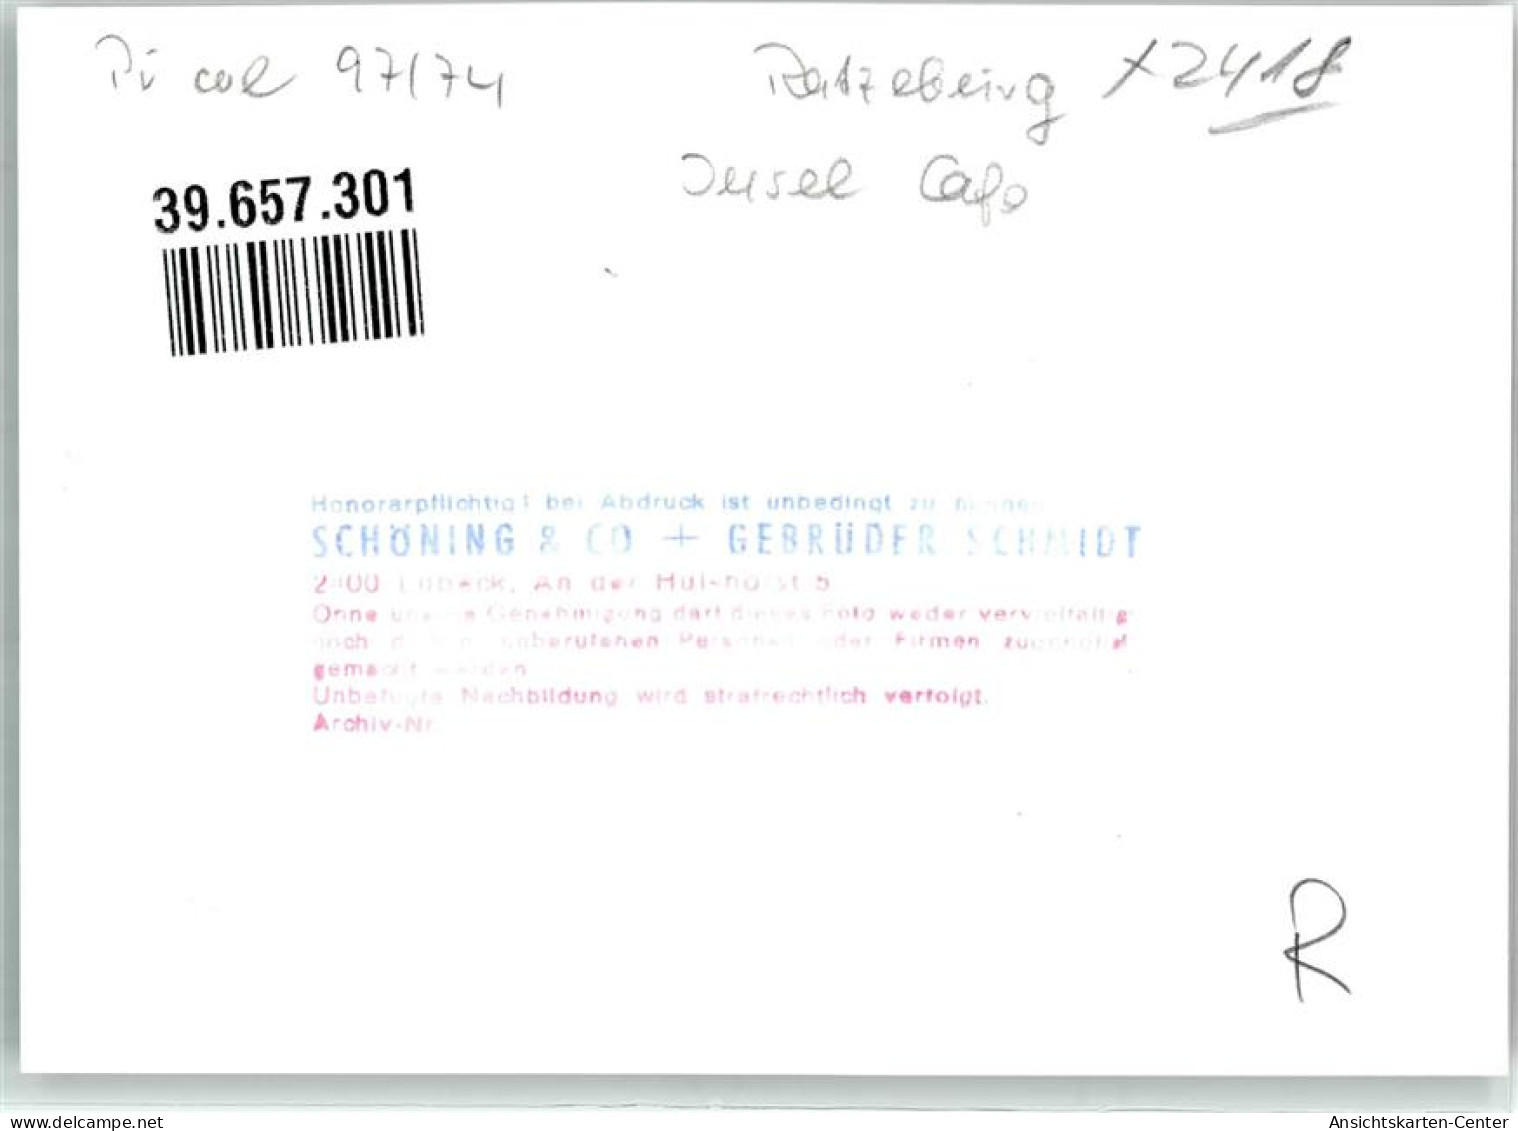 39657301 - Ratzeburg - Ratzeburg